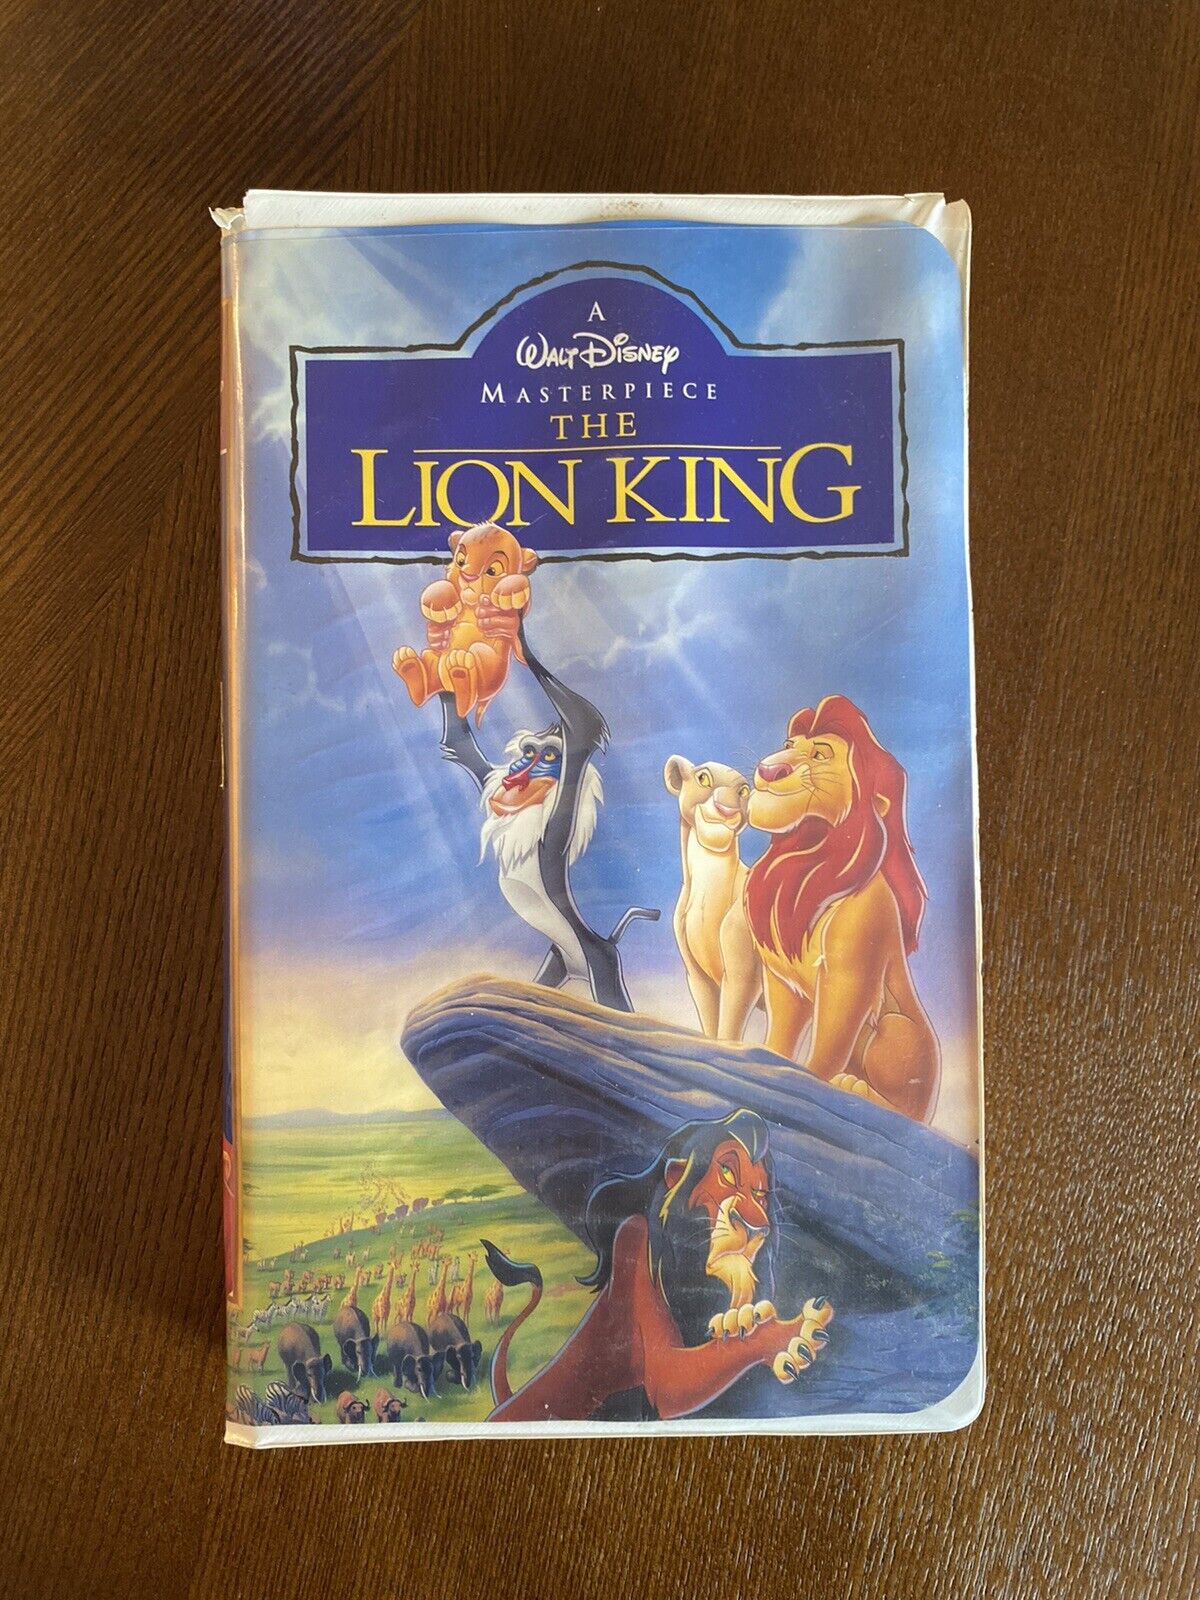 ORIGINAL  RARE  THE LION KING VHS (WALT DISNEY MASTERPIECE COLLECTION) 1994